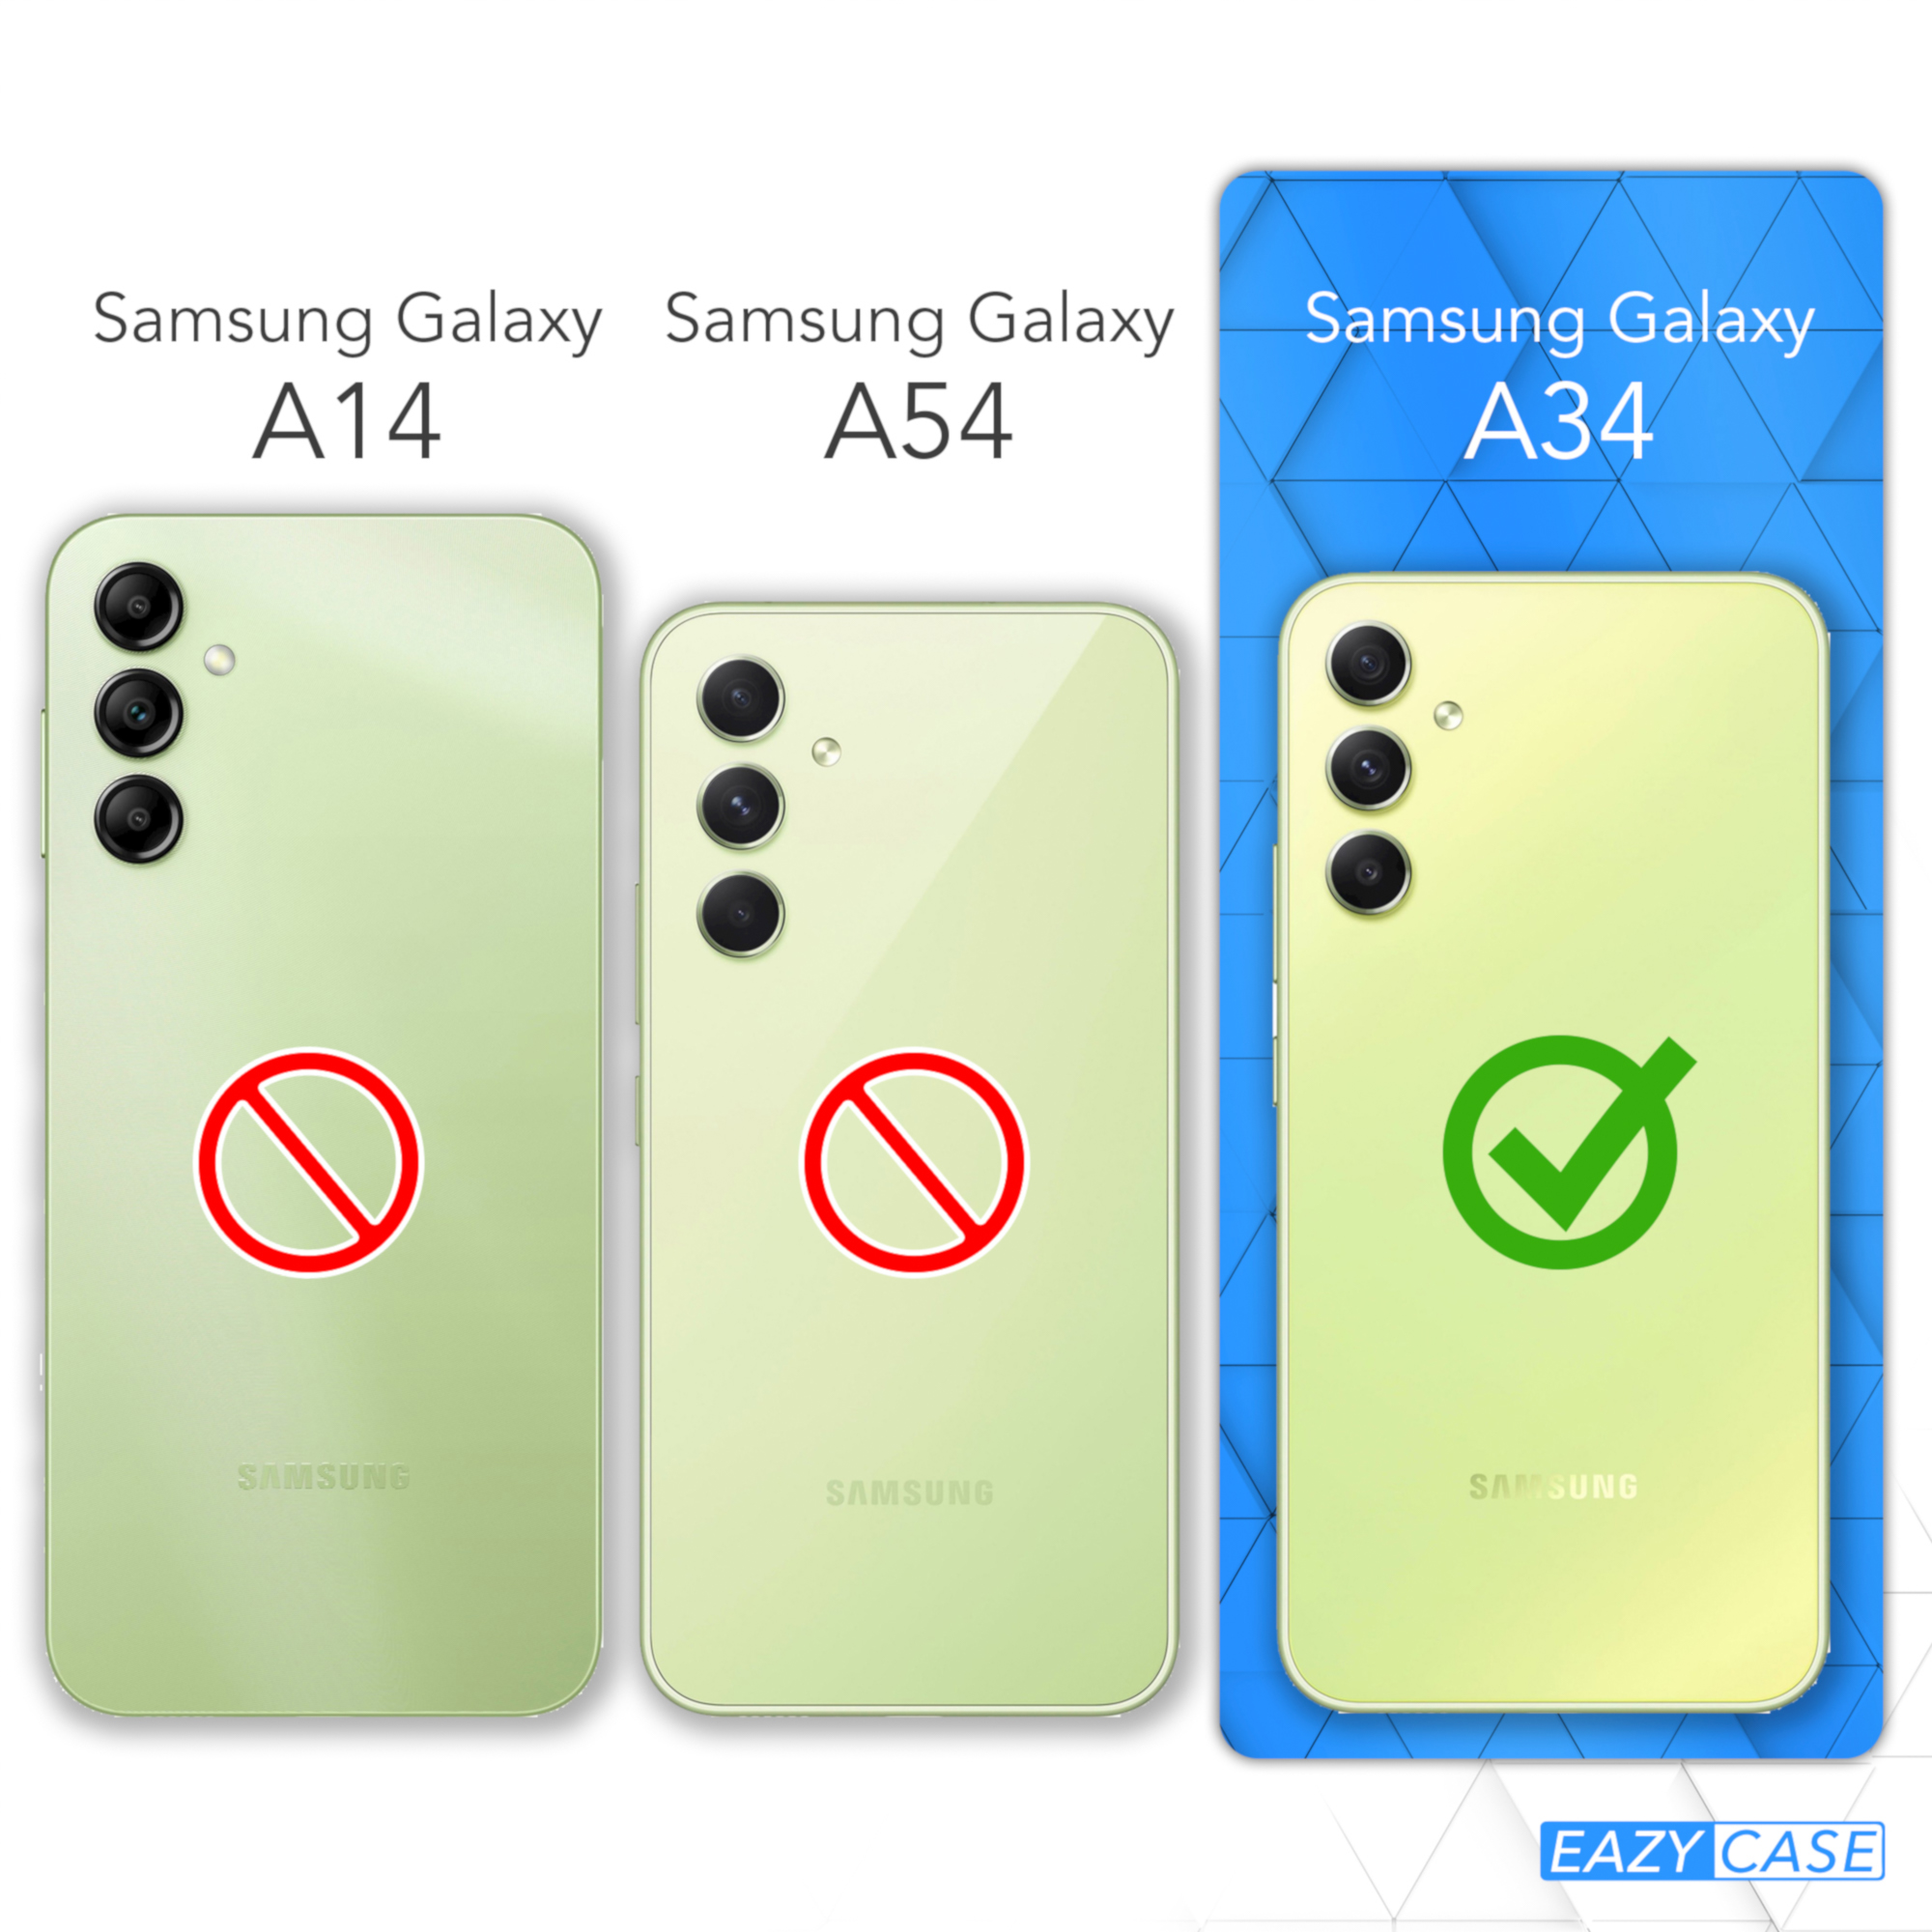 EAZY CASE Slimcover Clear, Durchsichtig Backcover, A34, Galaxy Samsung